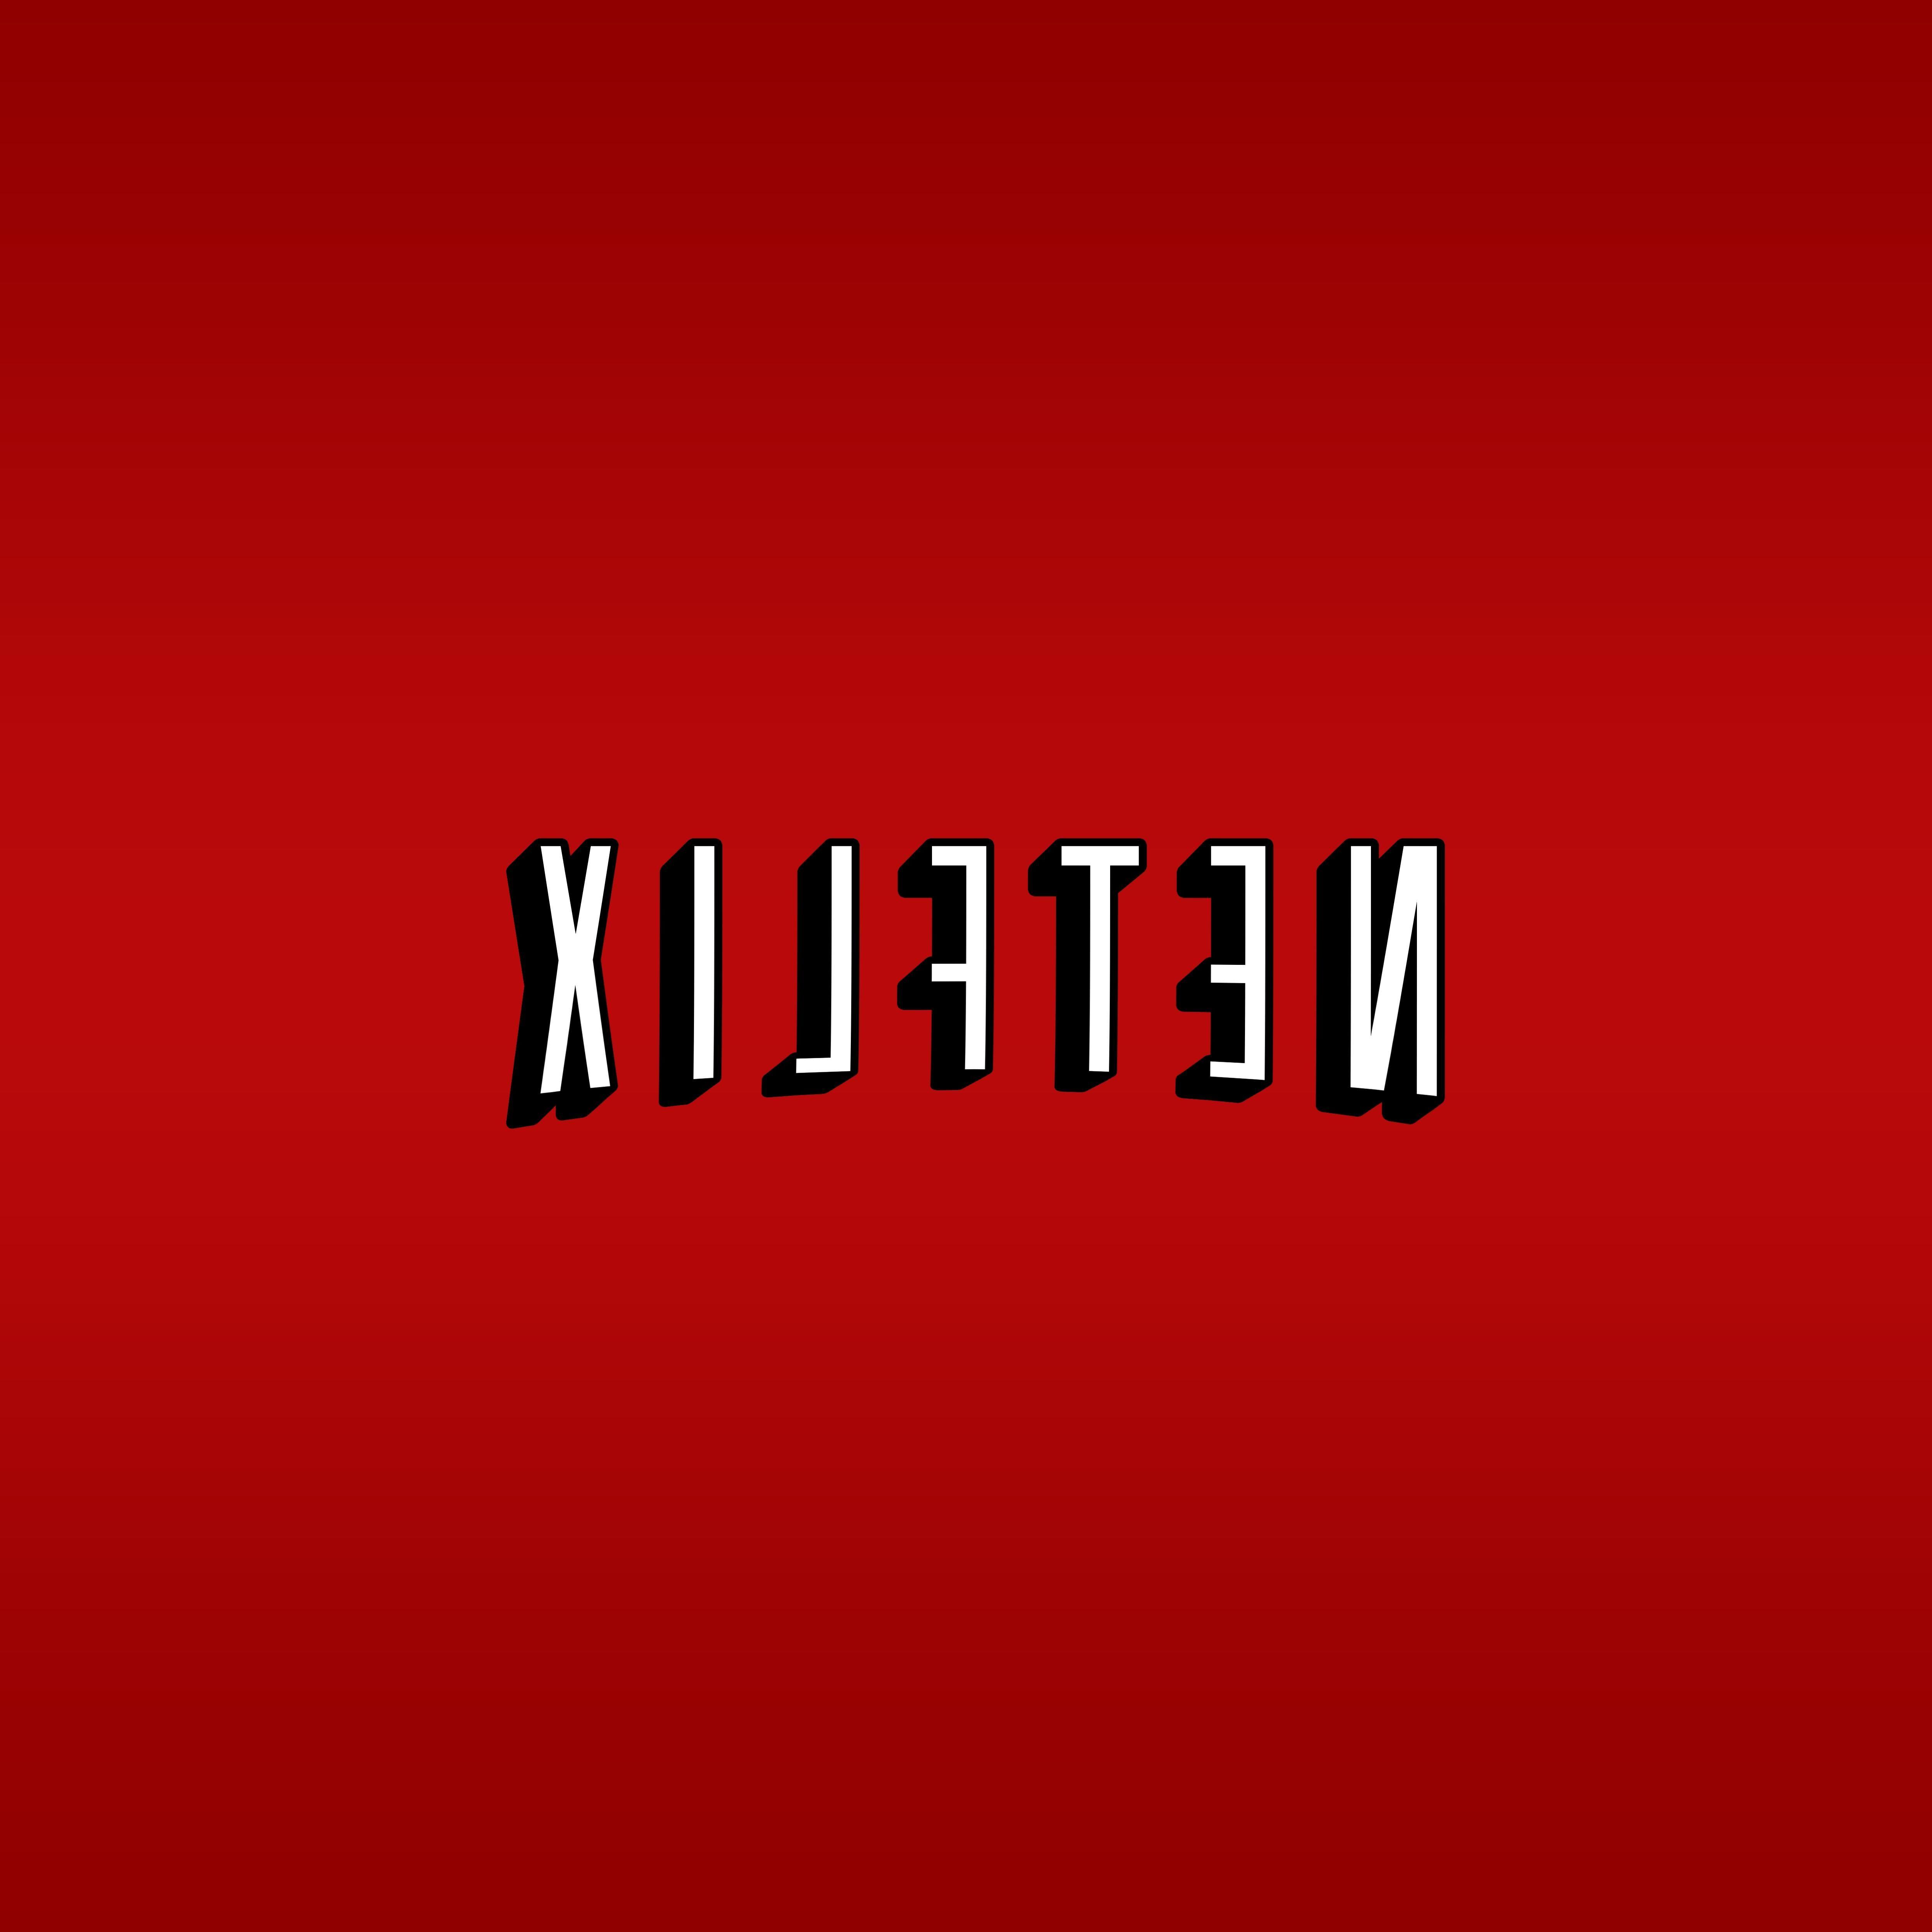 New Netflix App Logo - Free Netflix Logo Icon 246977 | Download Netflix Logo Icon - 246977